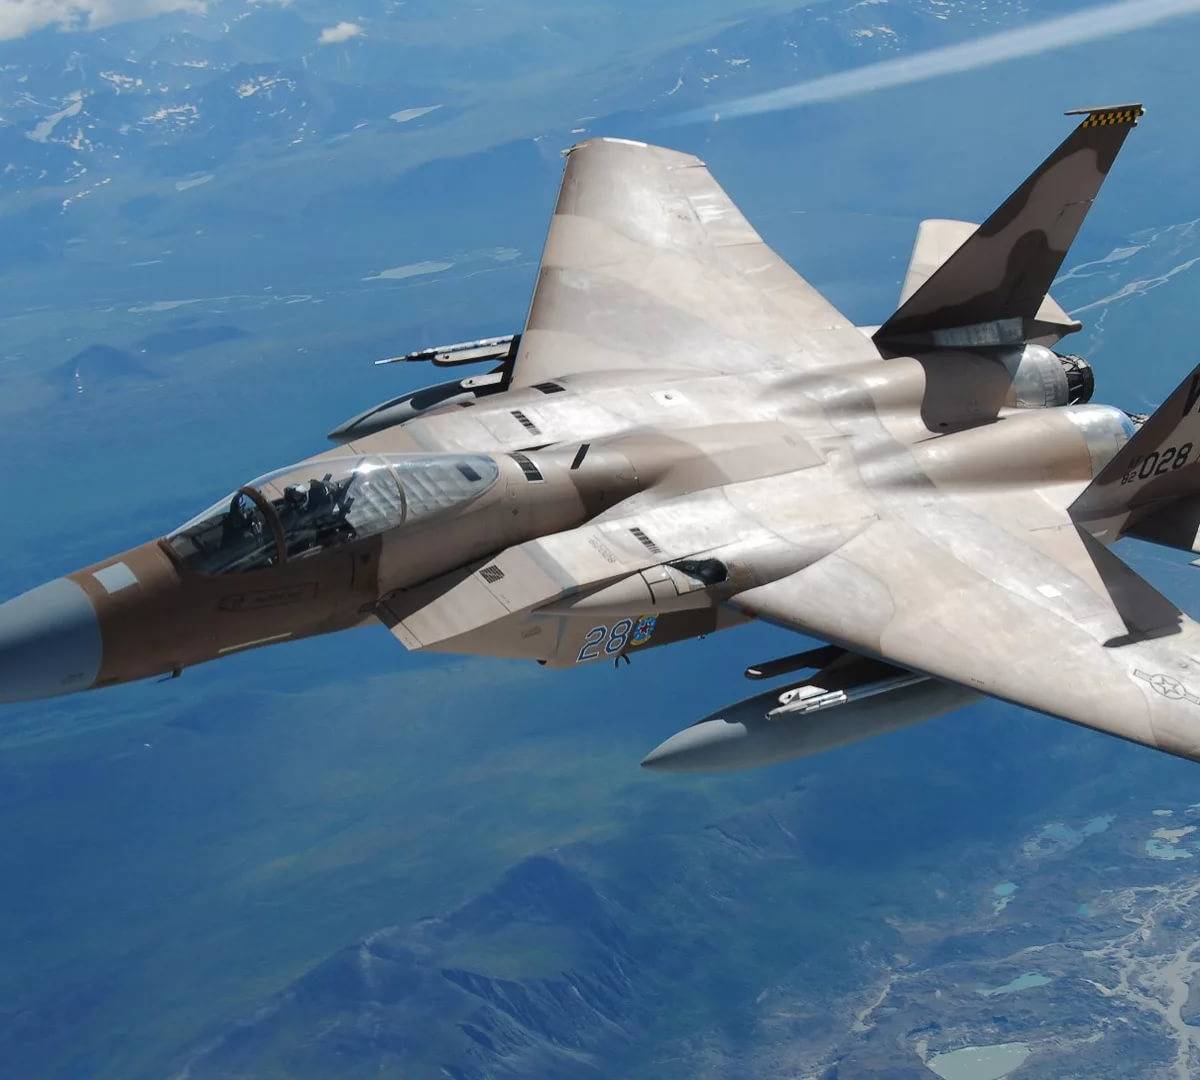 Противники МиГ-21 на Ближнем Востоке